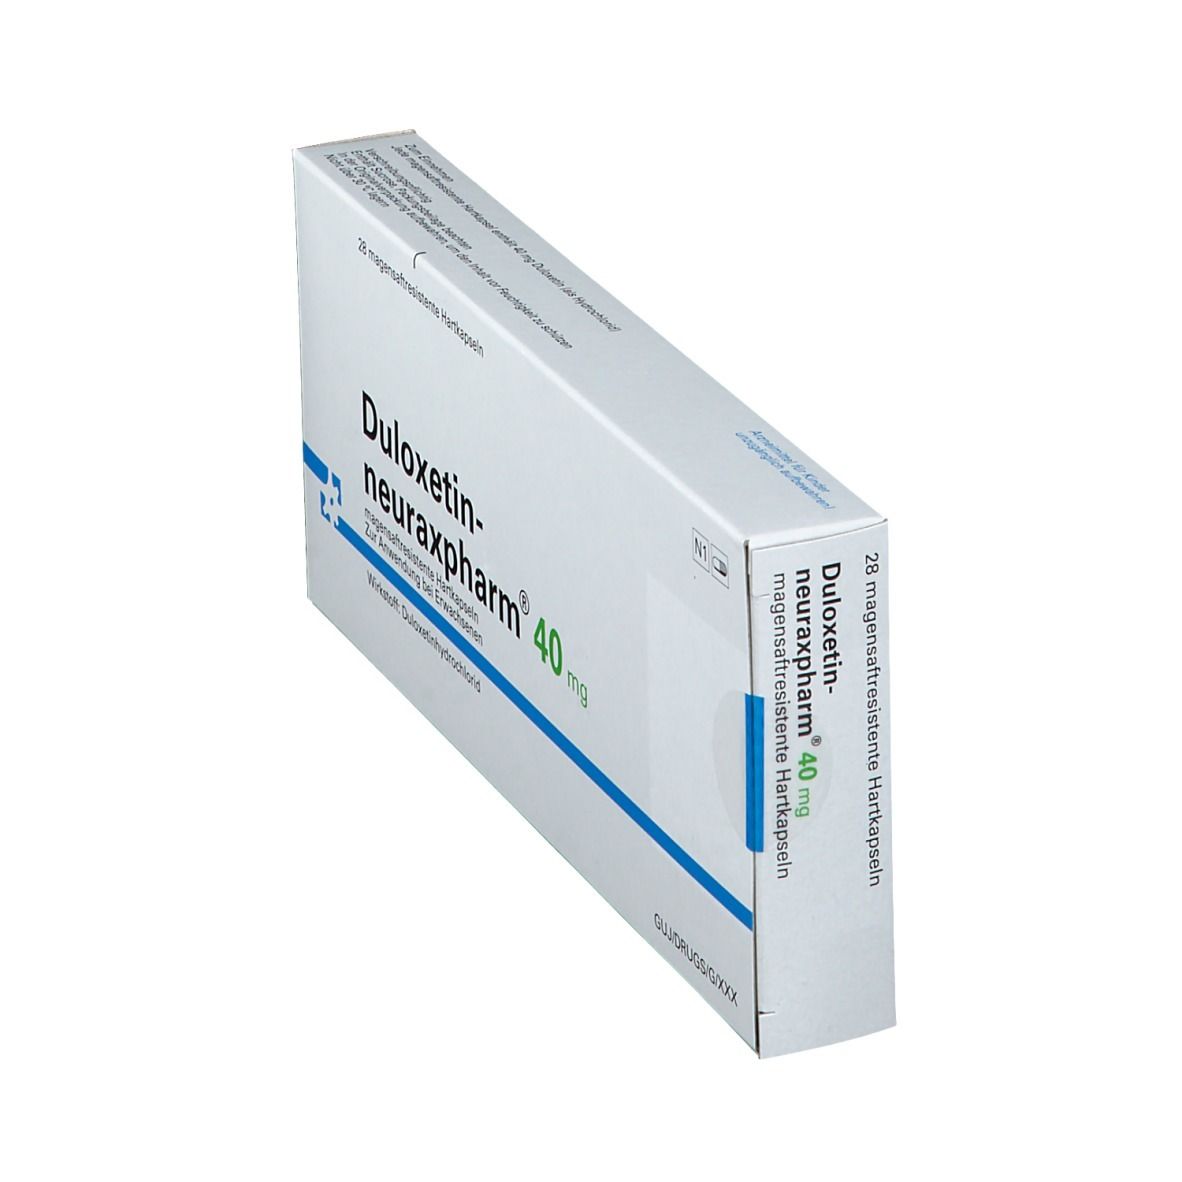 Duloxetin-neuraxpharm® 40 mg